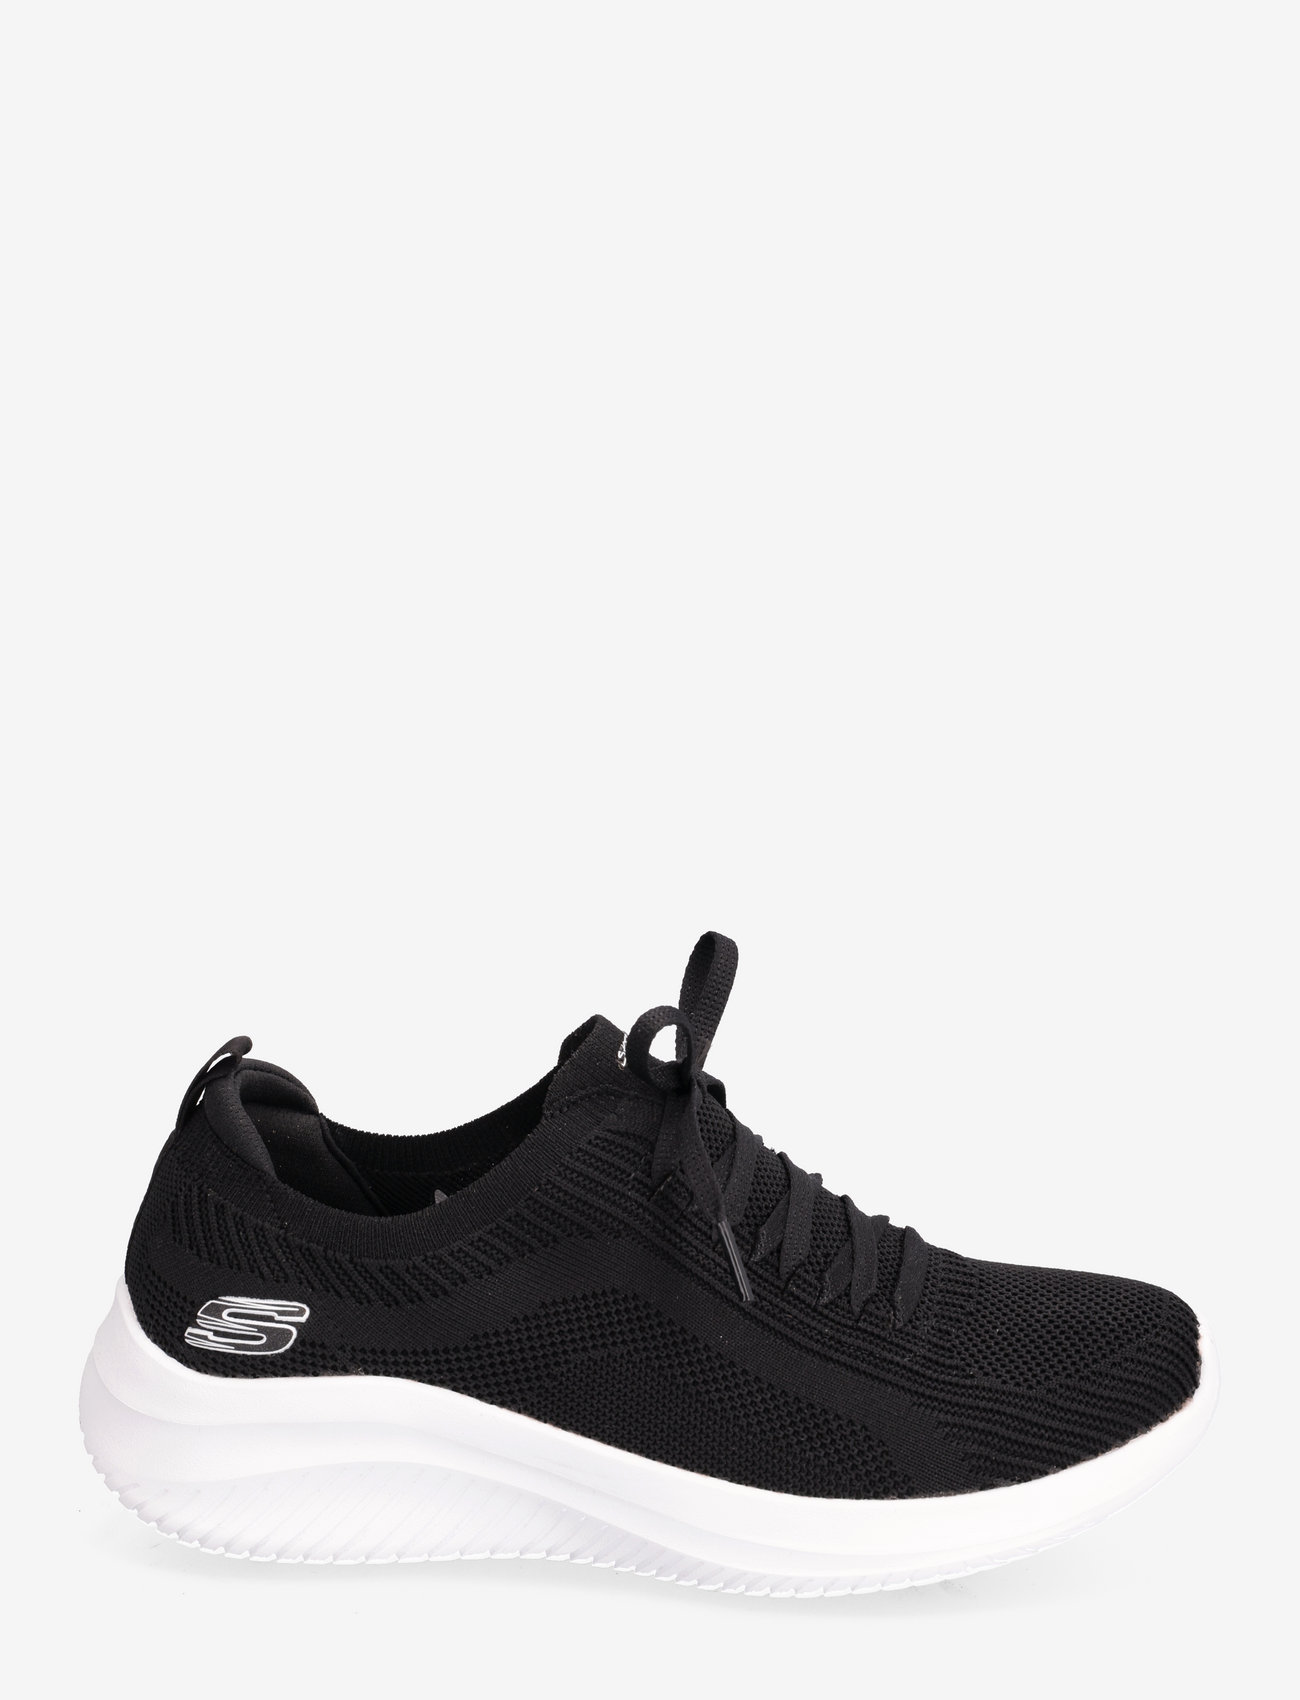 Skechers - Womens Ultra Flex 3.0  - Big Plan - low top sneakers - bkw black white - 1